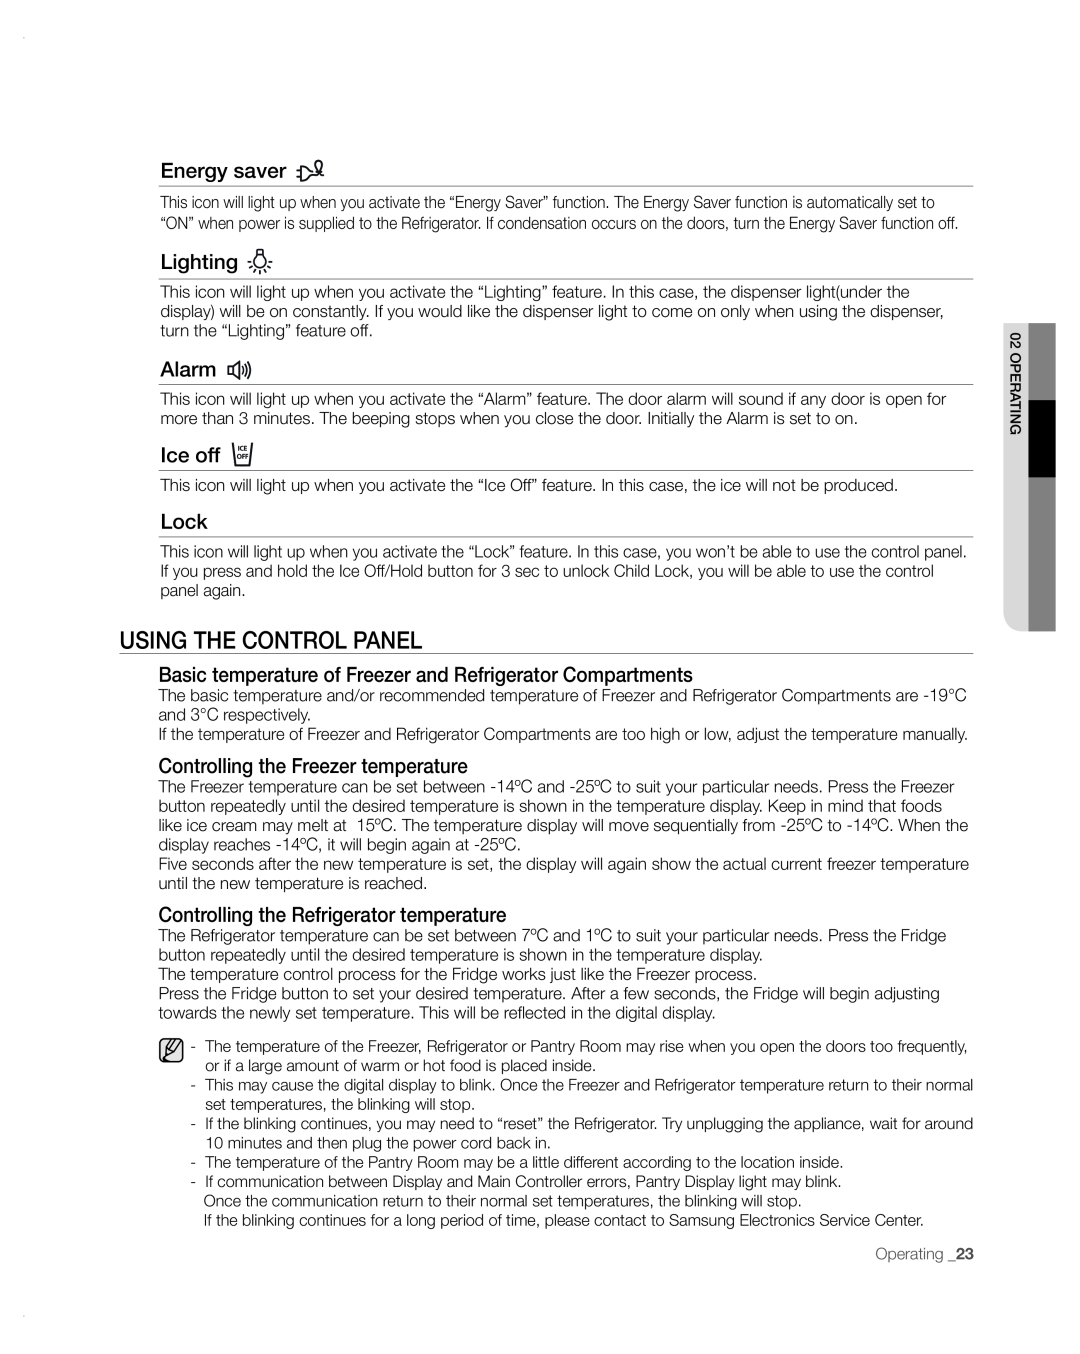 Samsung RFG297AA user manual Using the control panel, Energy saver, Lighting, Alarm, Ice off, Lock, Operating 